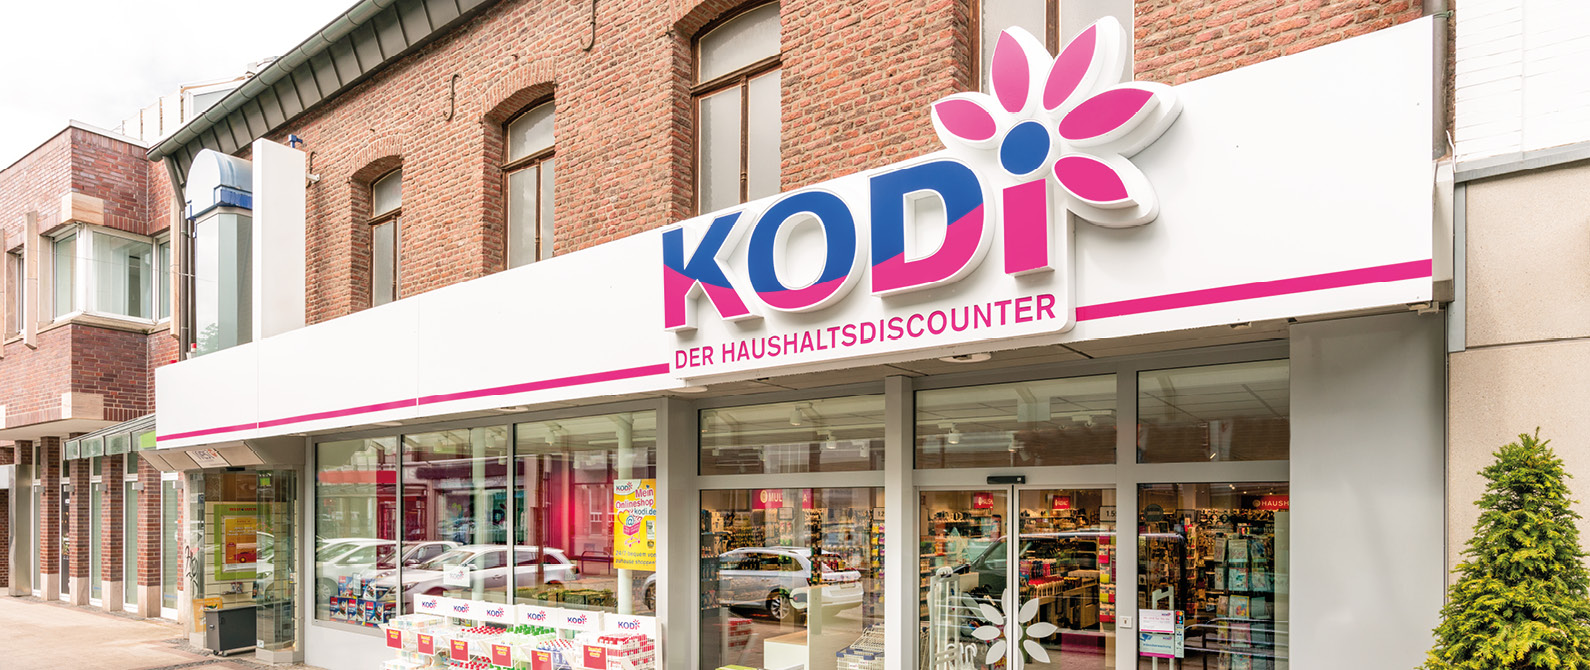 KODi Company